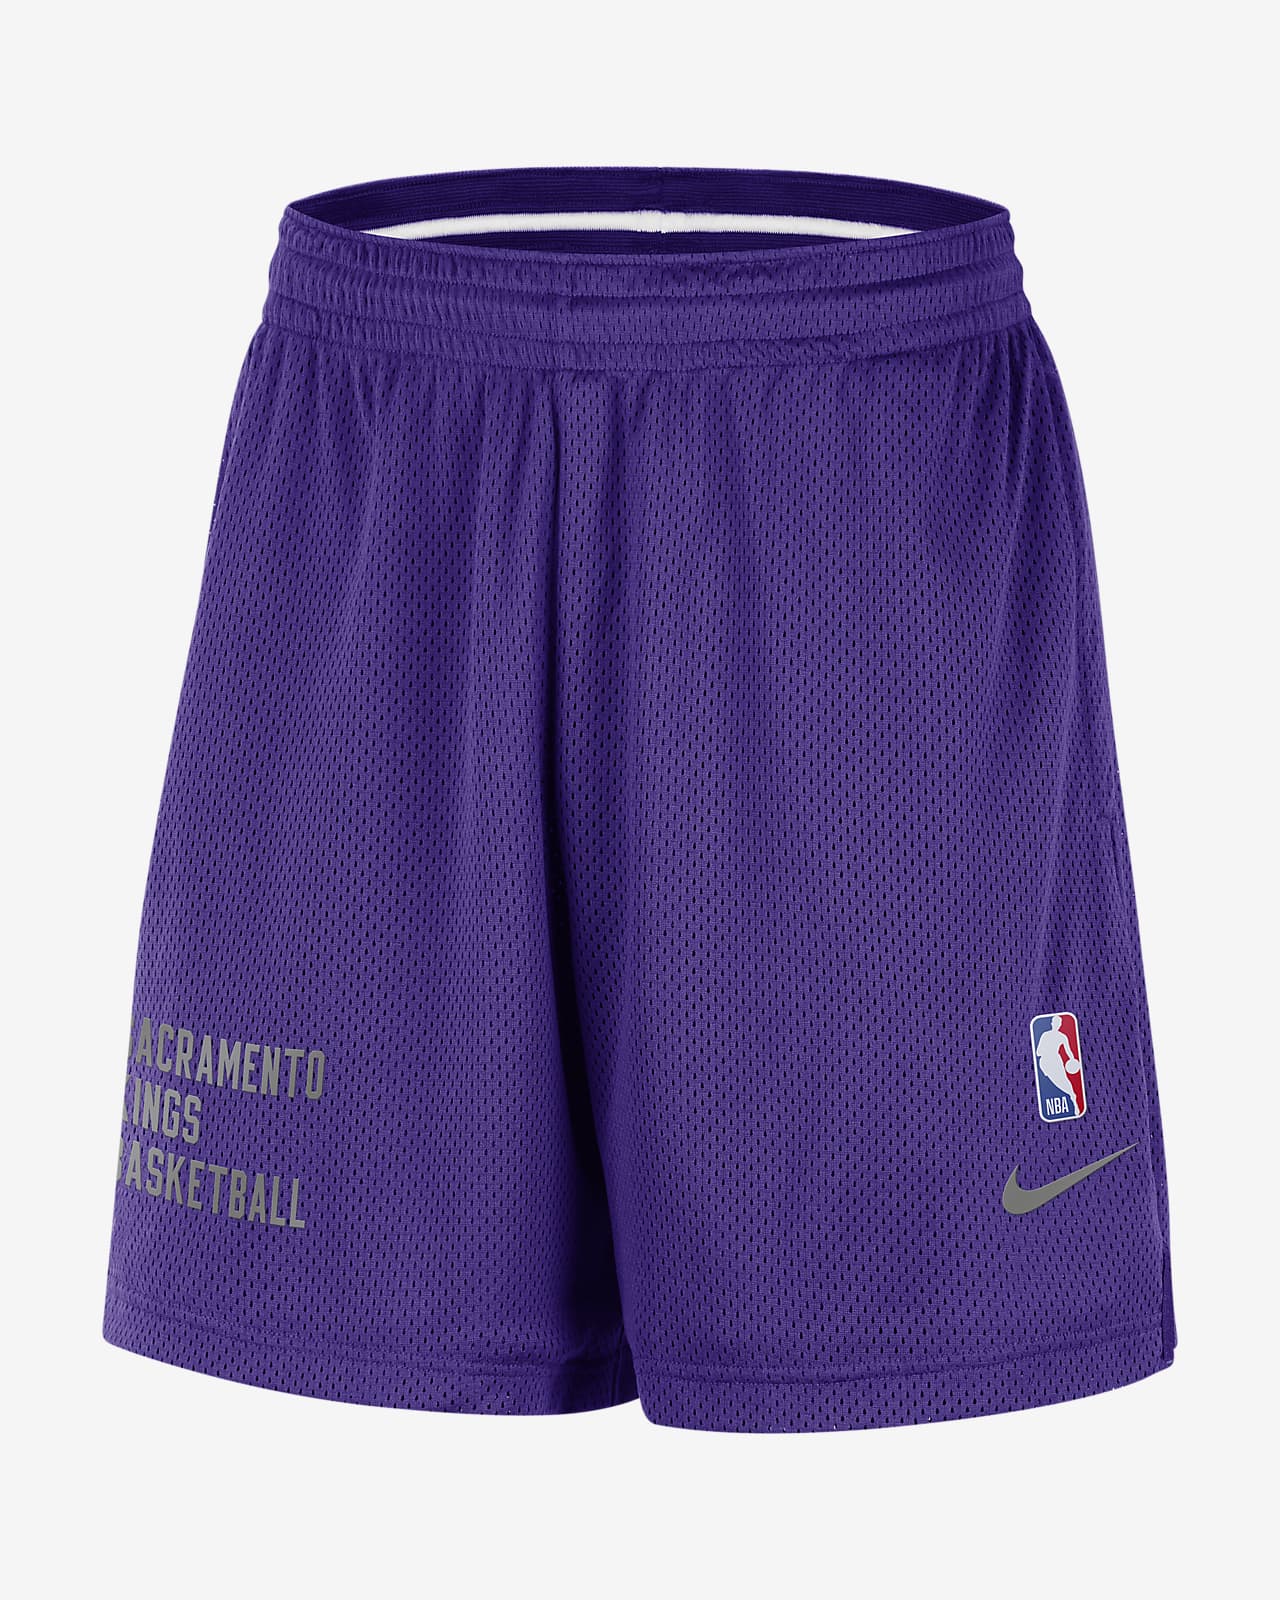 NWT Men's Purple Nike Basketball Padded Compression Shorts Size 2XL #C4